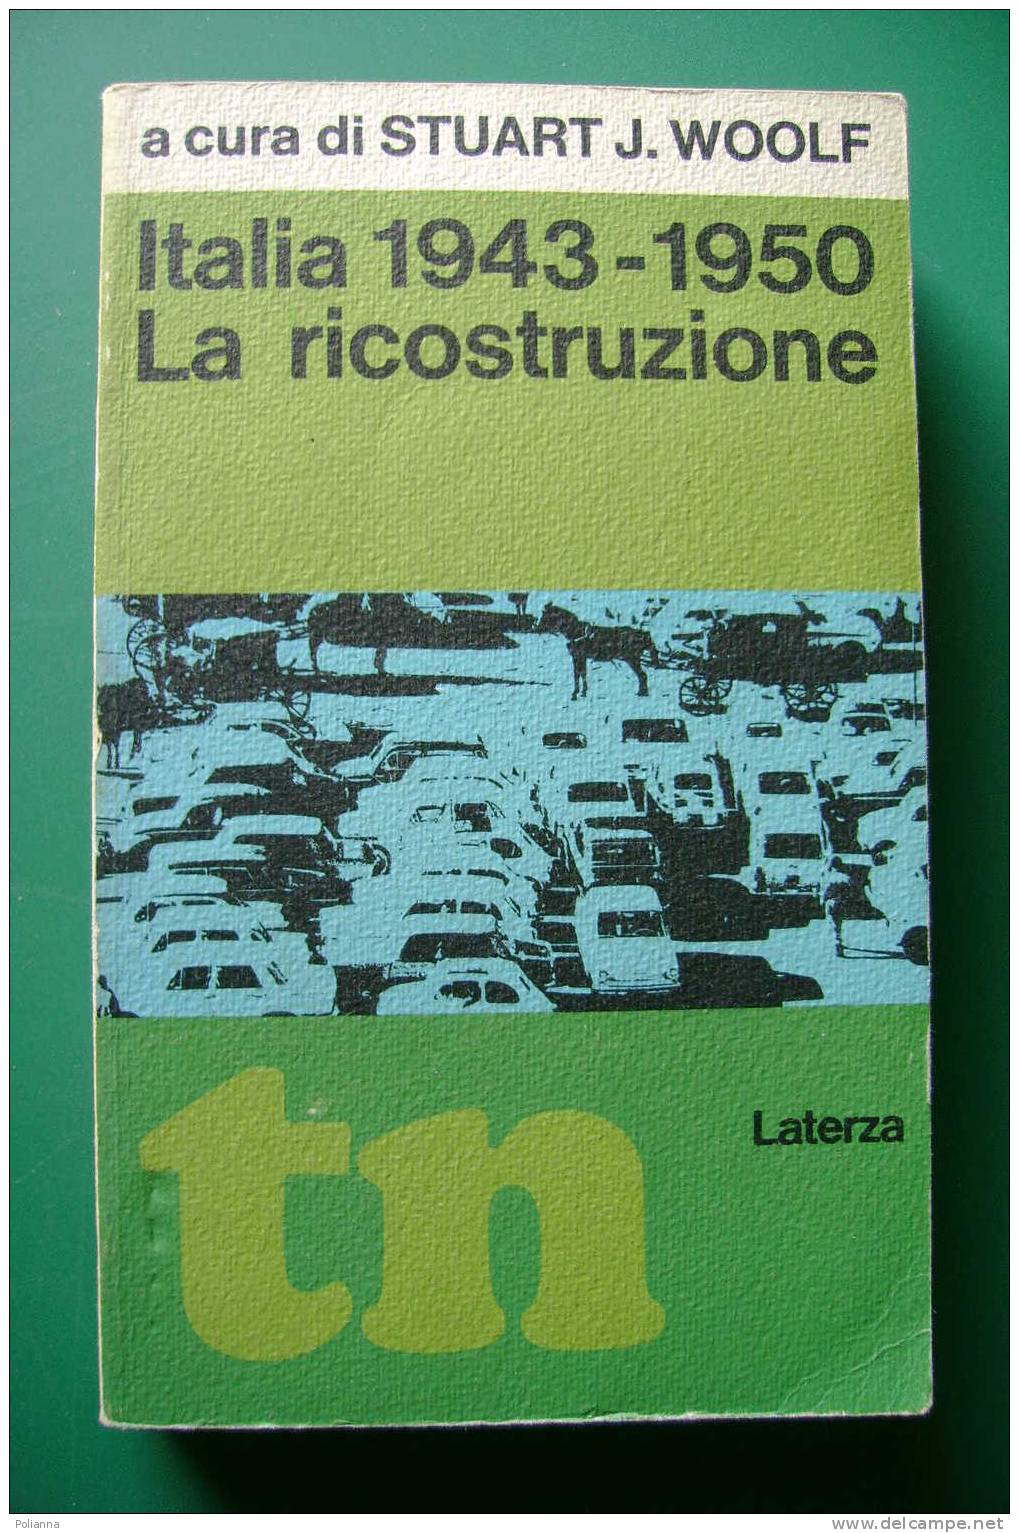 PDM/18 Woolf ITALIA 1943-1950 LA RICOSTRUZIONE Laterza 1972 - History, Biography, Philosophy